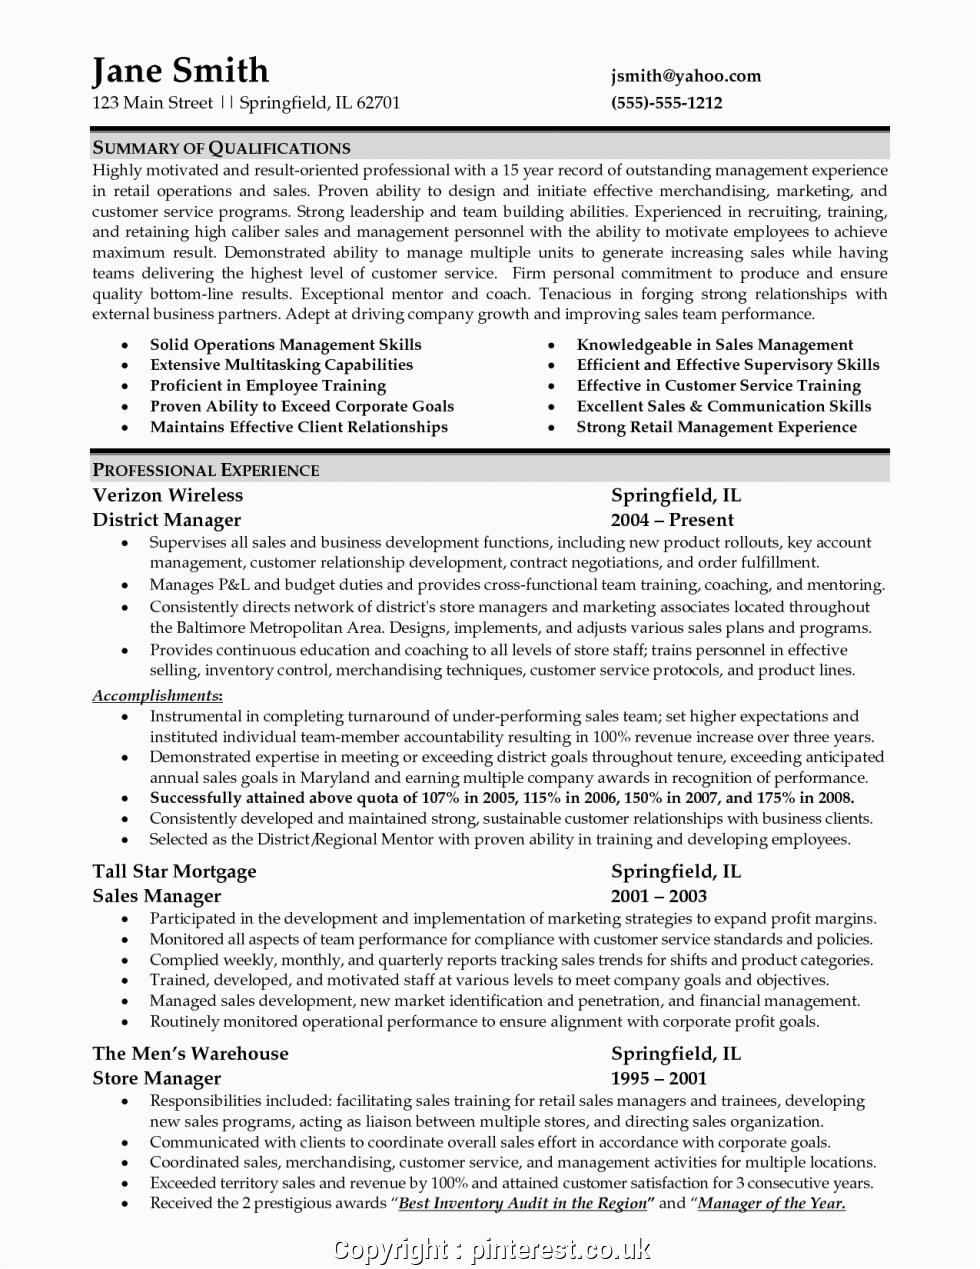 Sample Resume for Retail Management Position Simple Retail District Manager Resume Sample Sample Resume